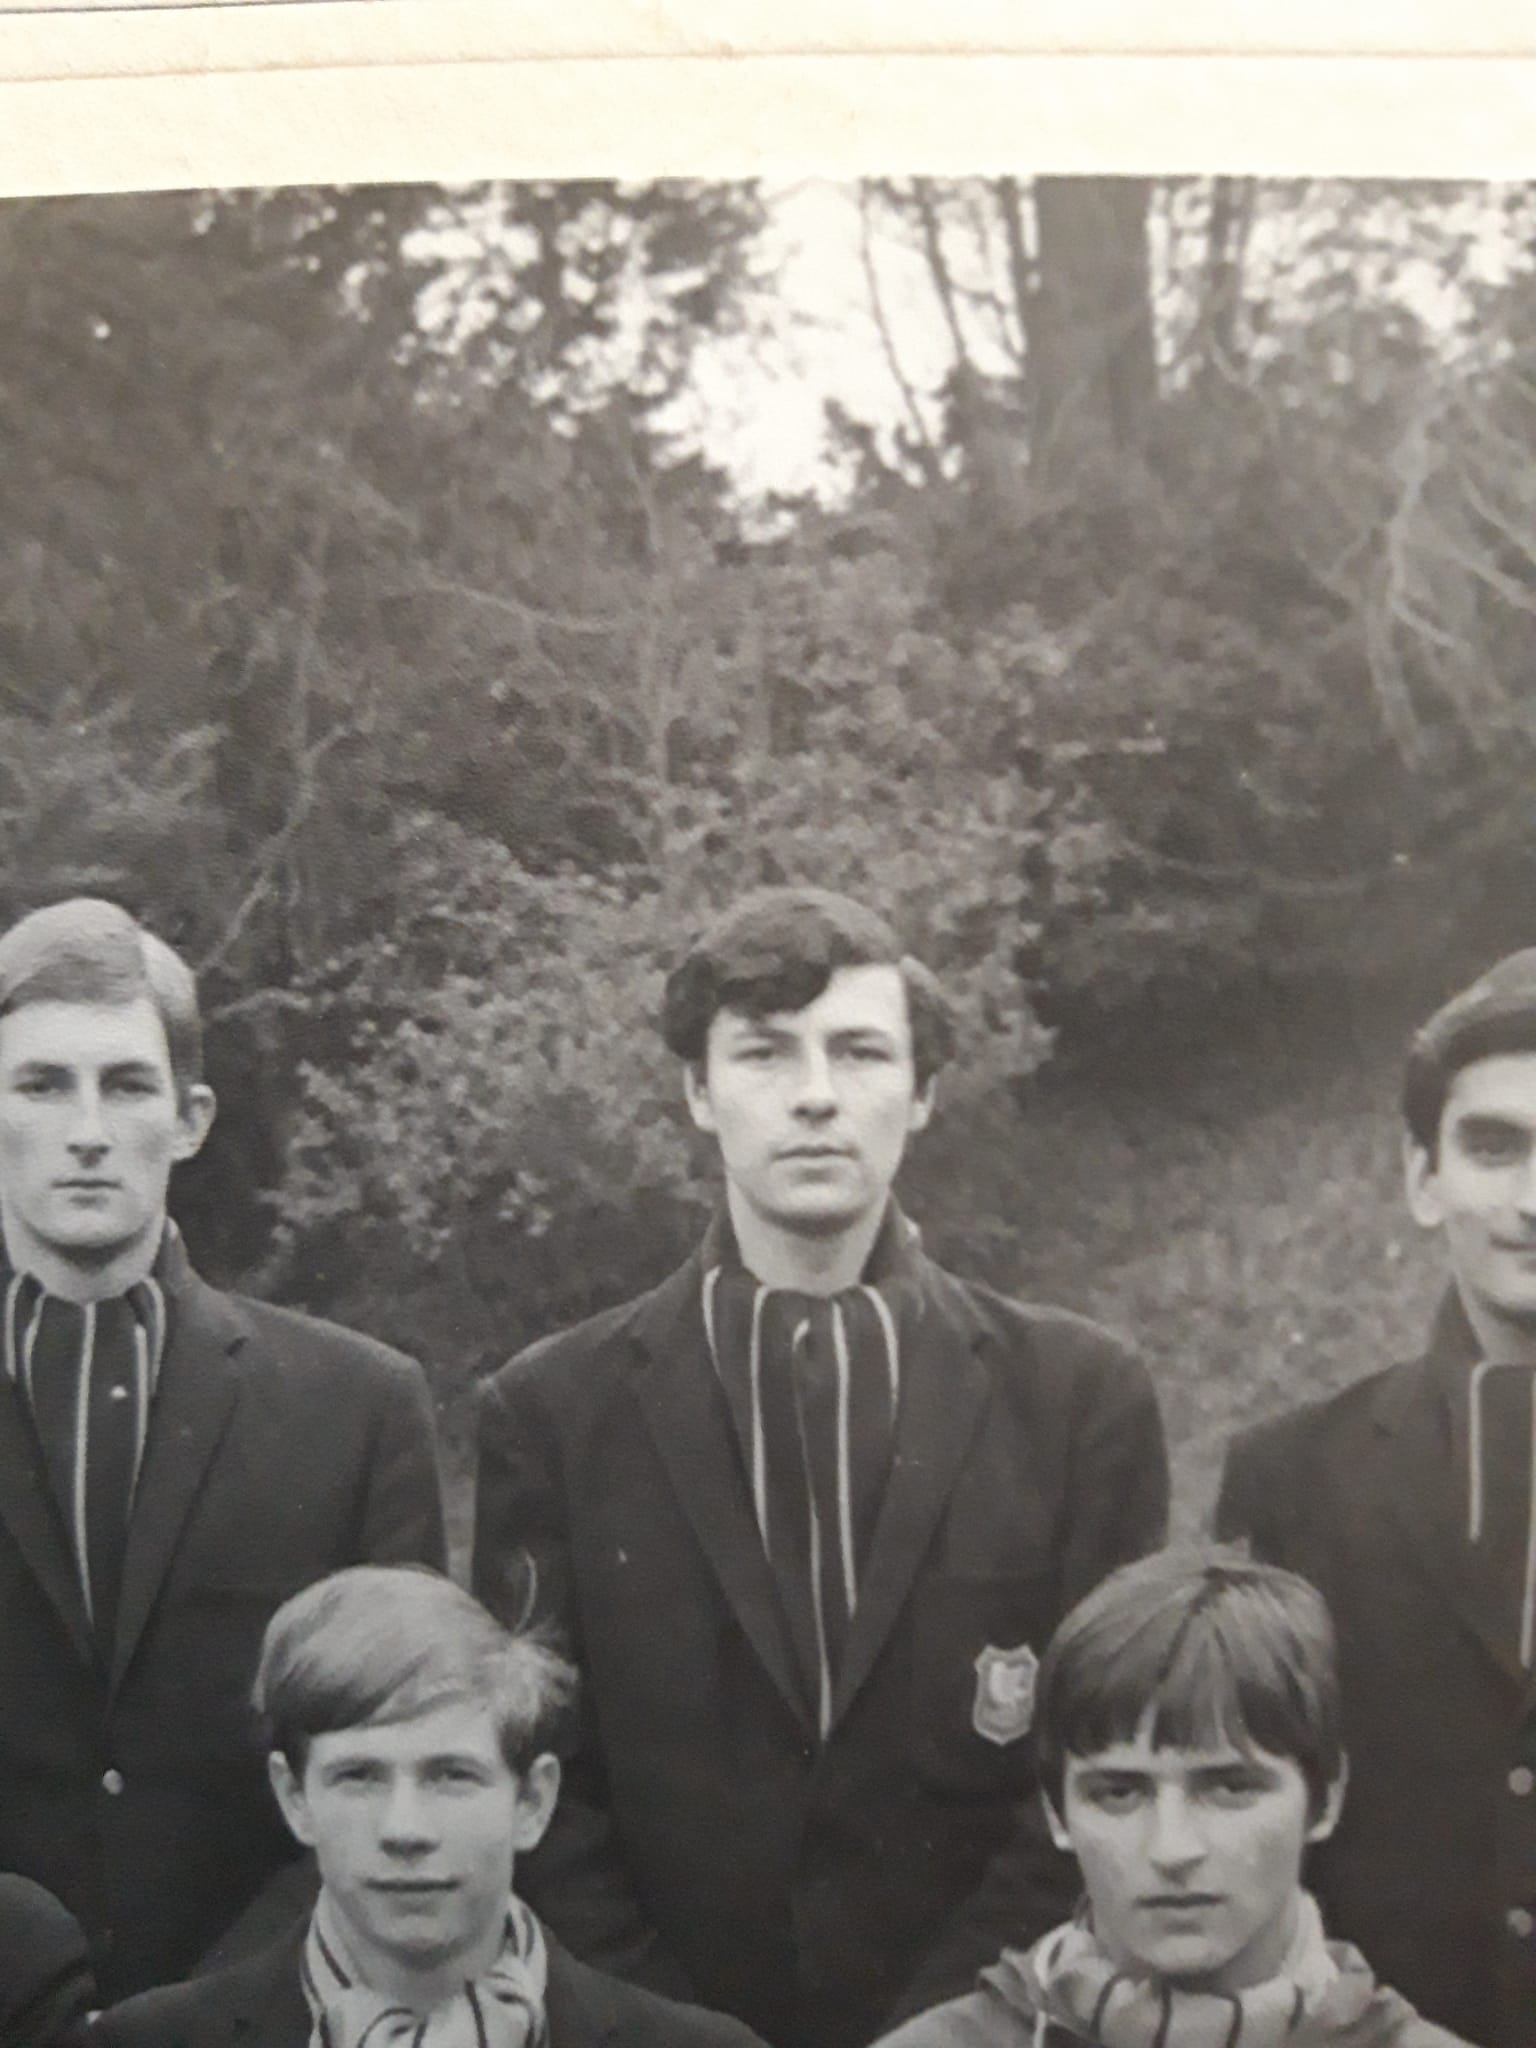 Photo of Peter Woodman (centre back row) taken around 1967